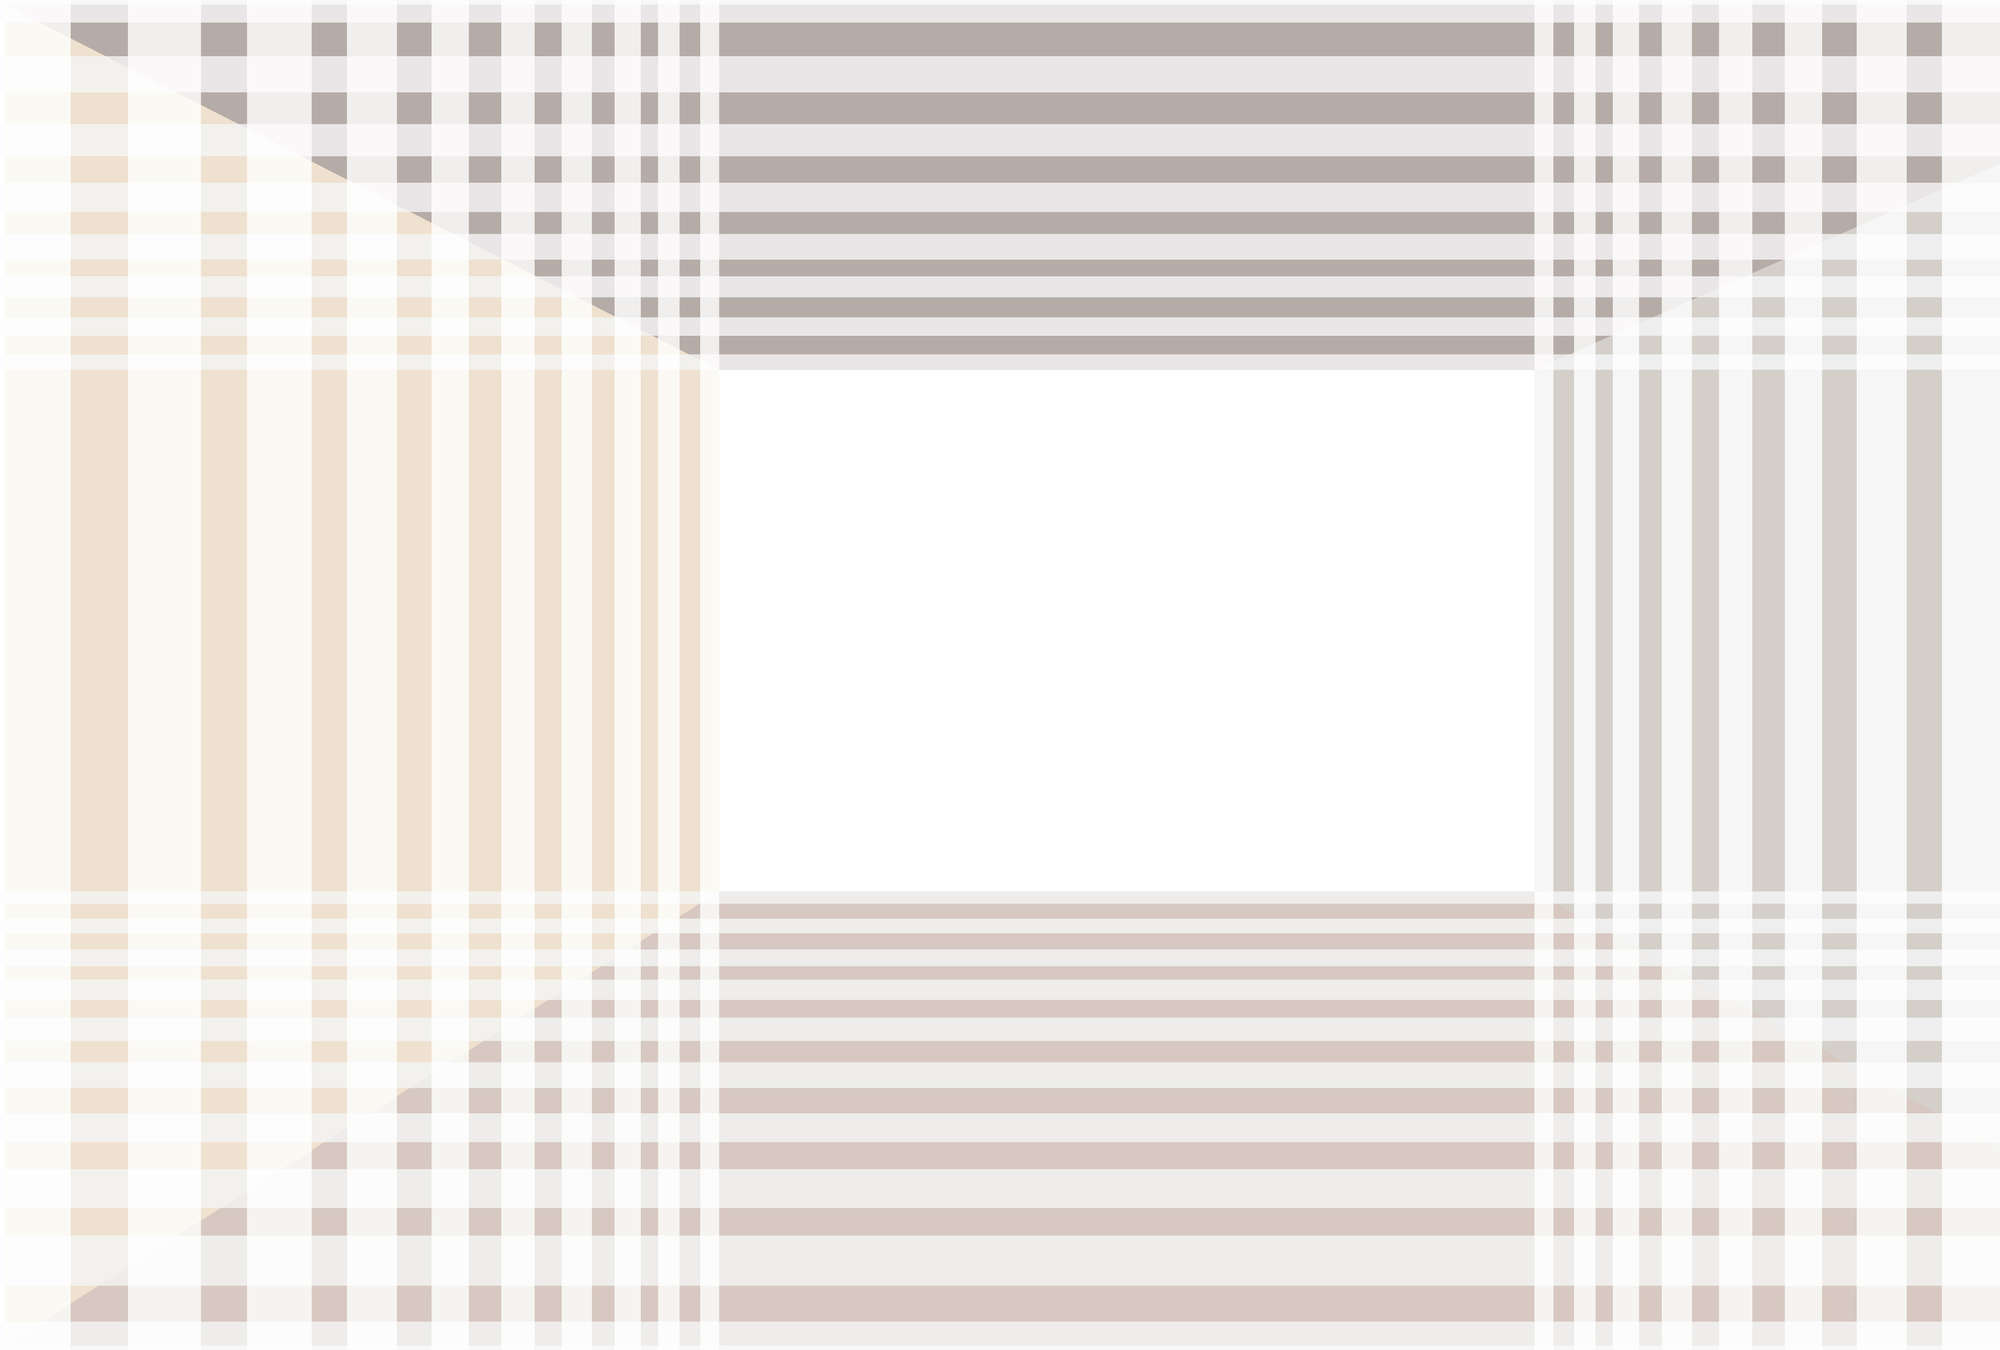             Carta da parati a righe minimalista - Bianco, grigio, beige
        